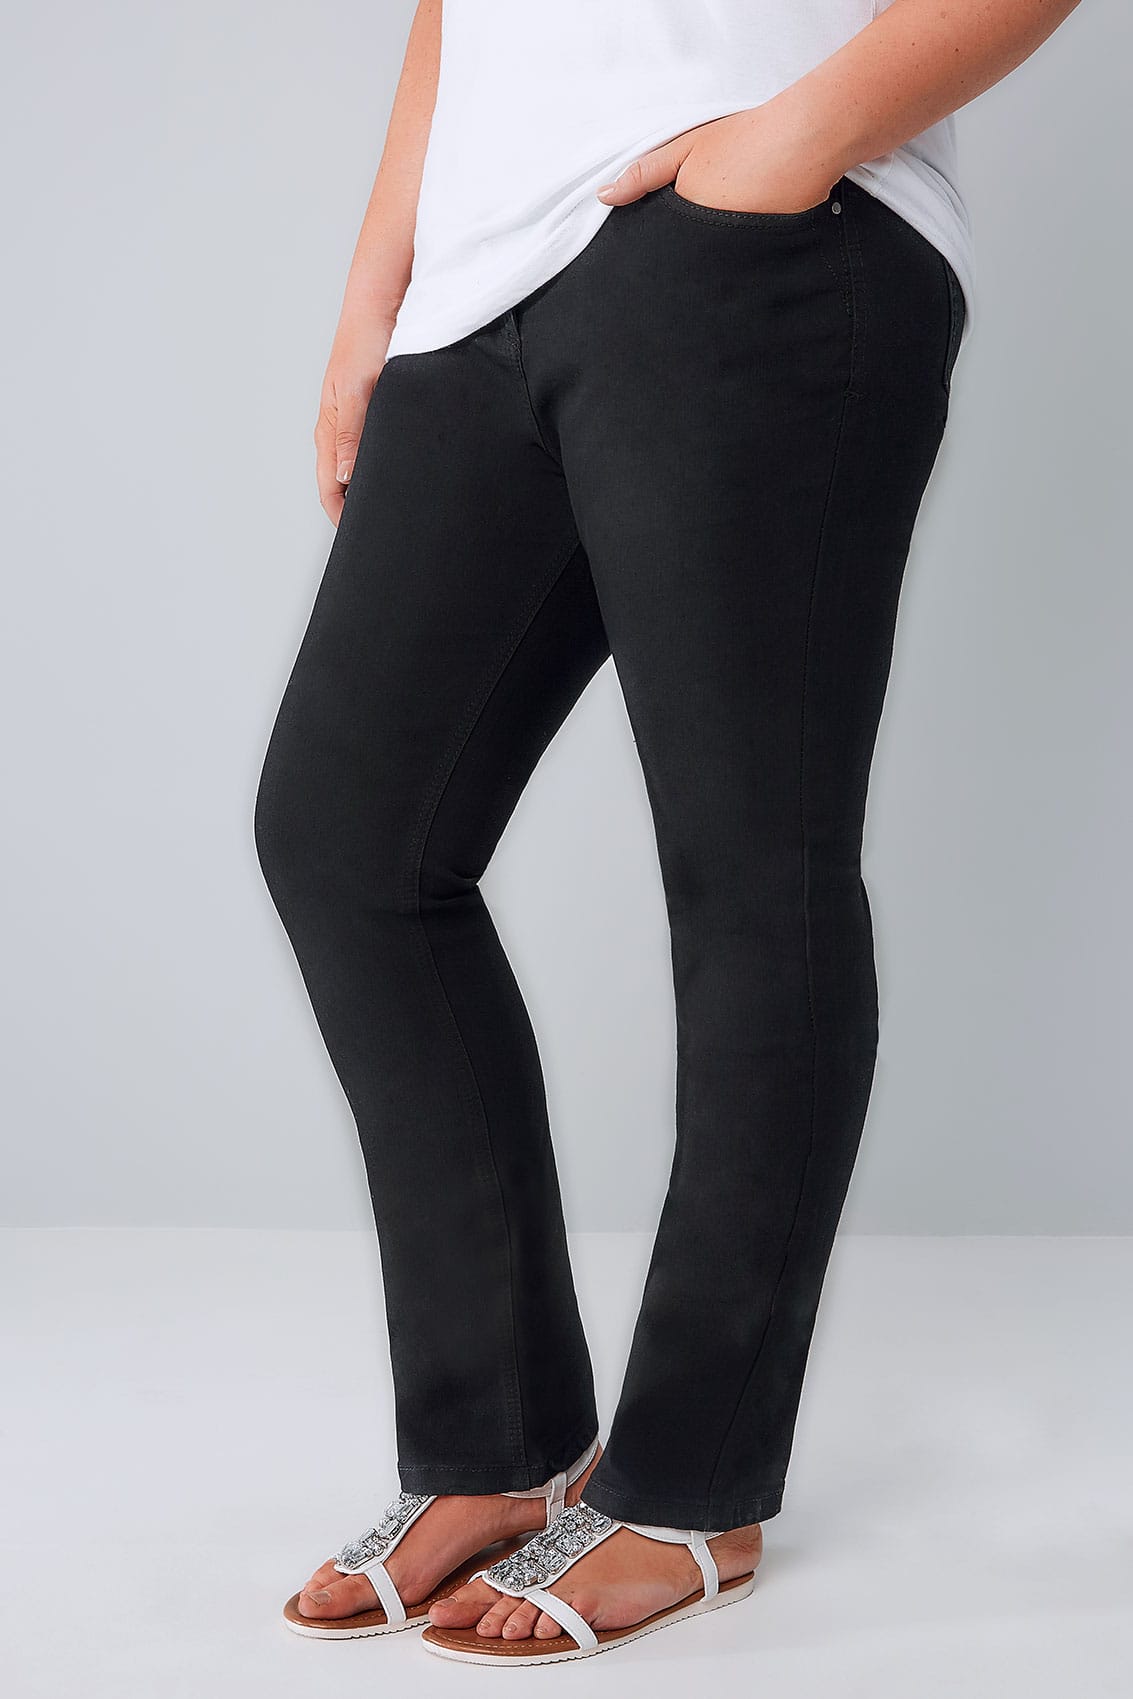 Black Straight Leg 5 Pocket Jeans, Plus size 16 to 36